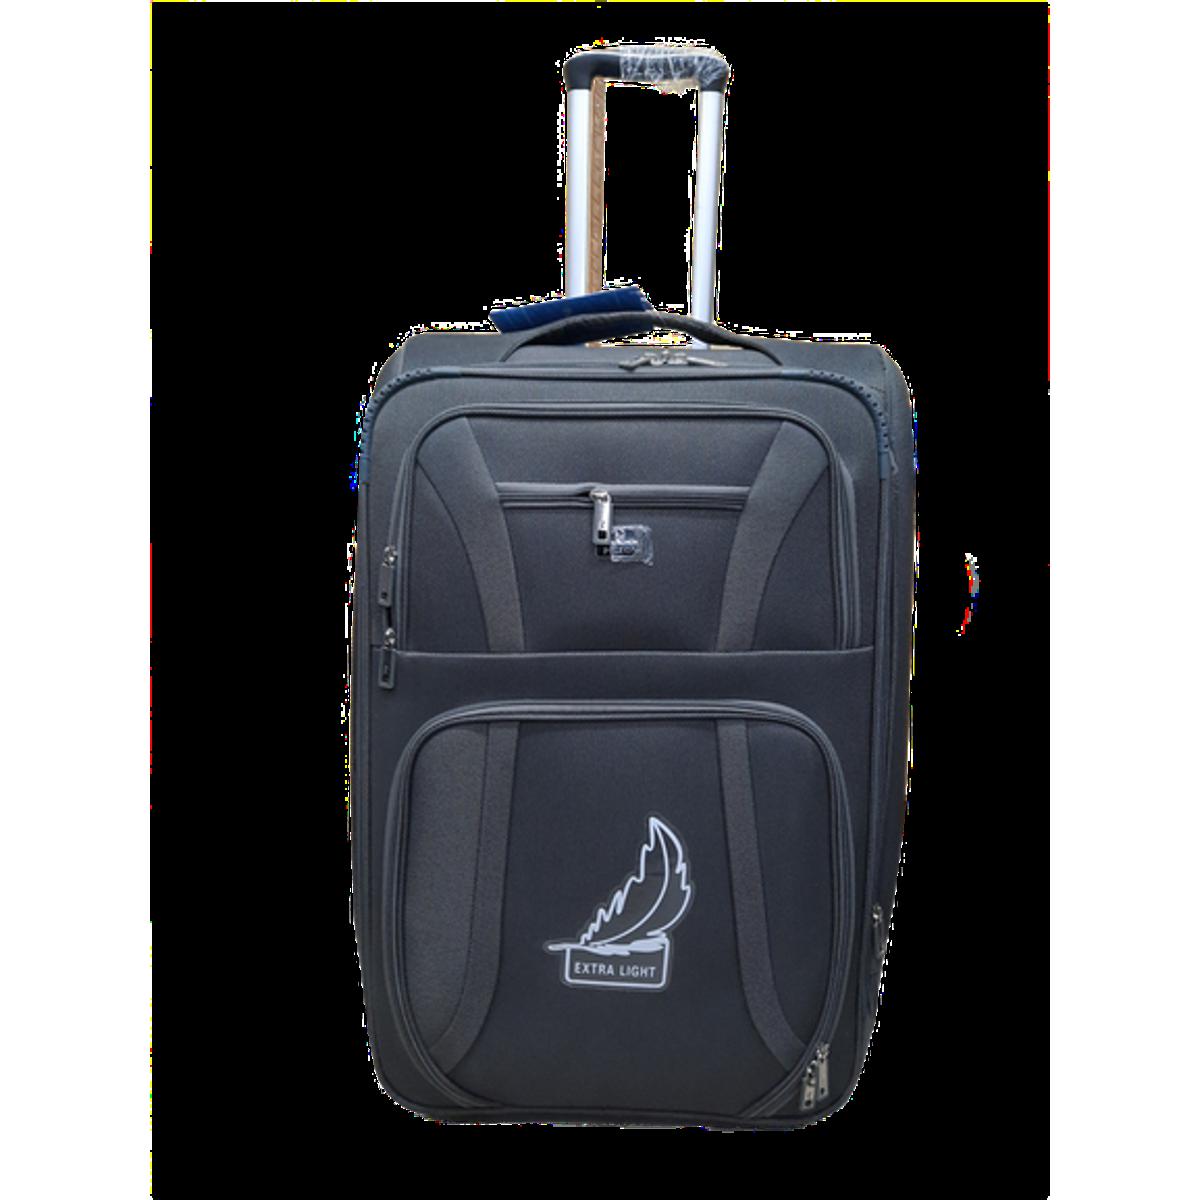 Luggage Bags By Polo Club USA | Luggage Sets | Set Of 3